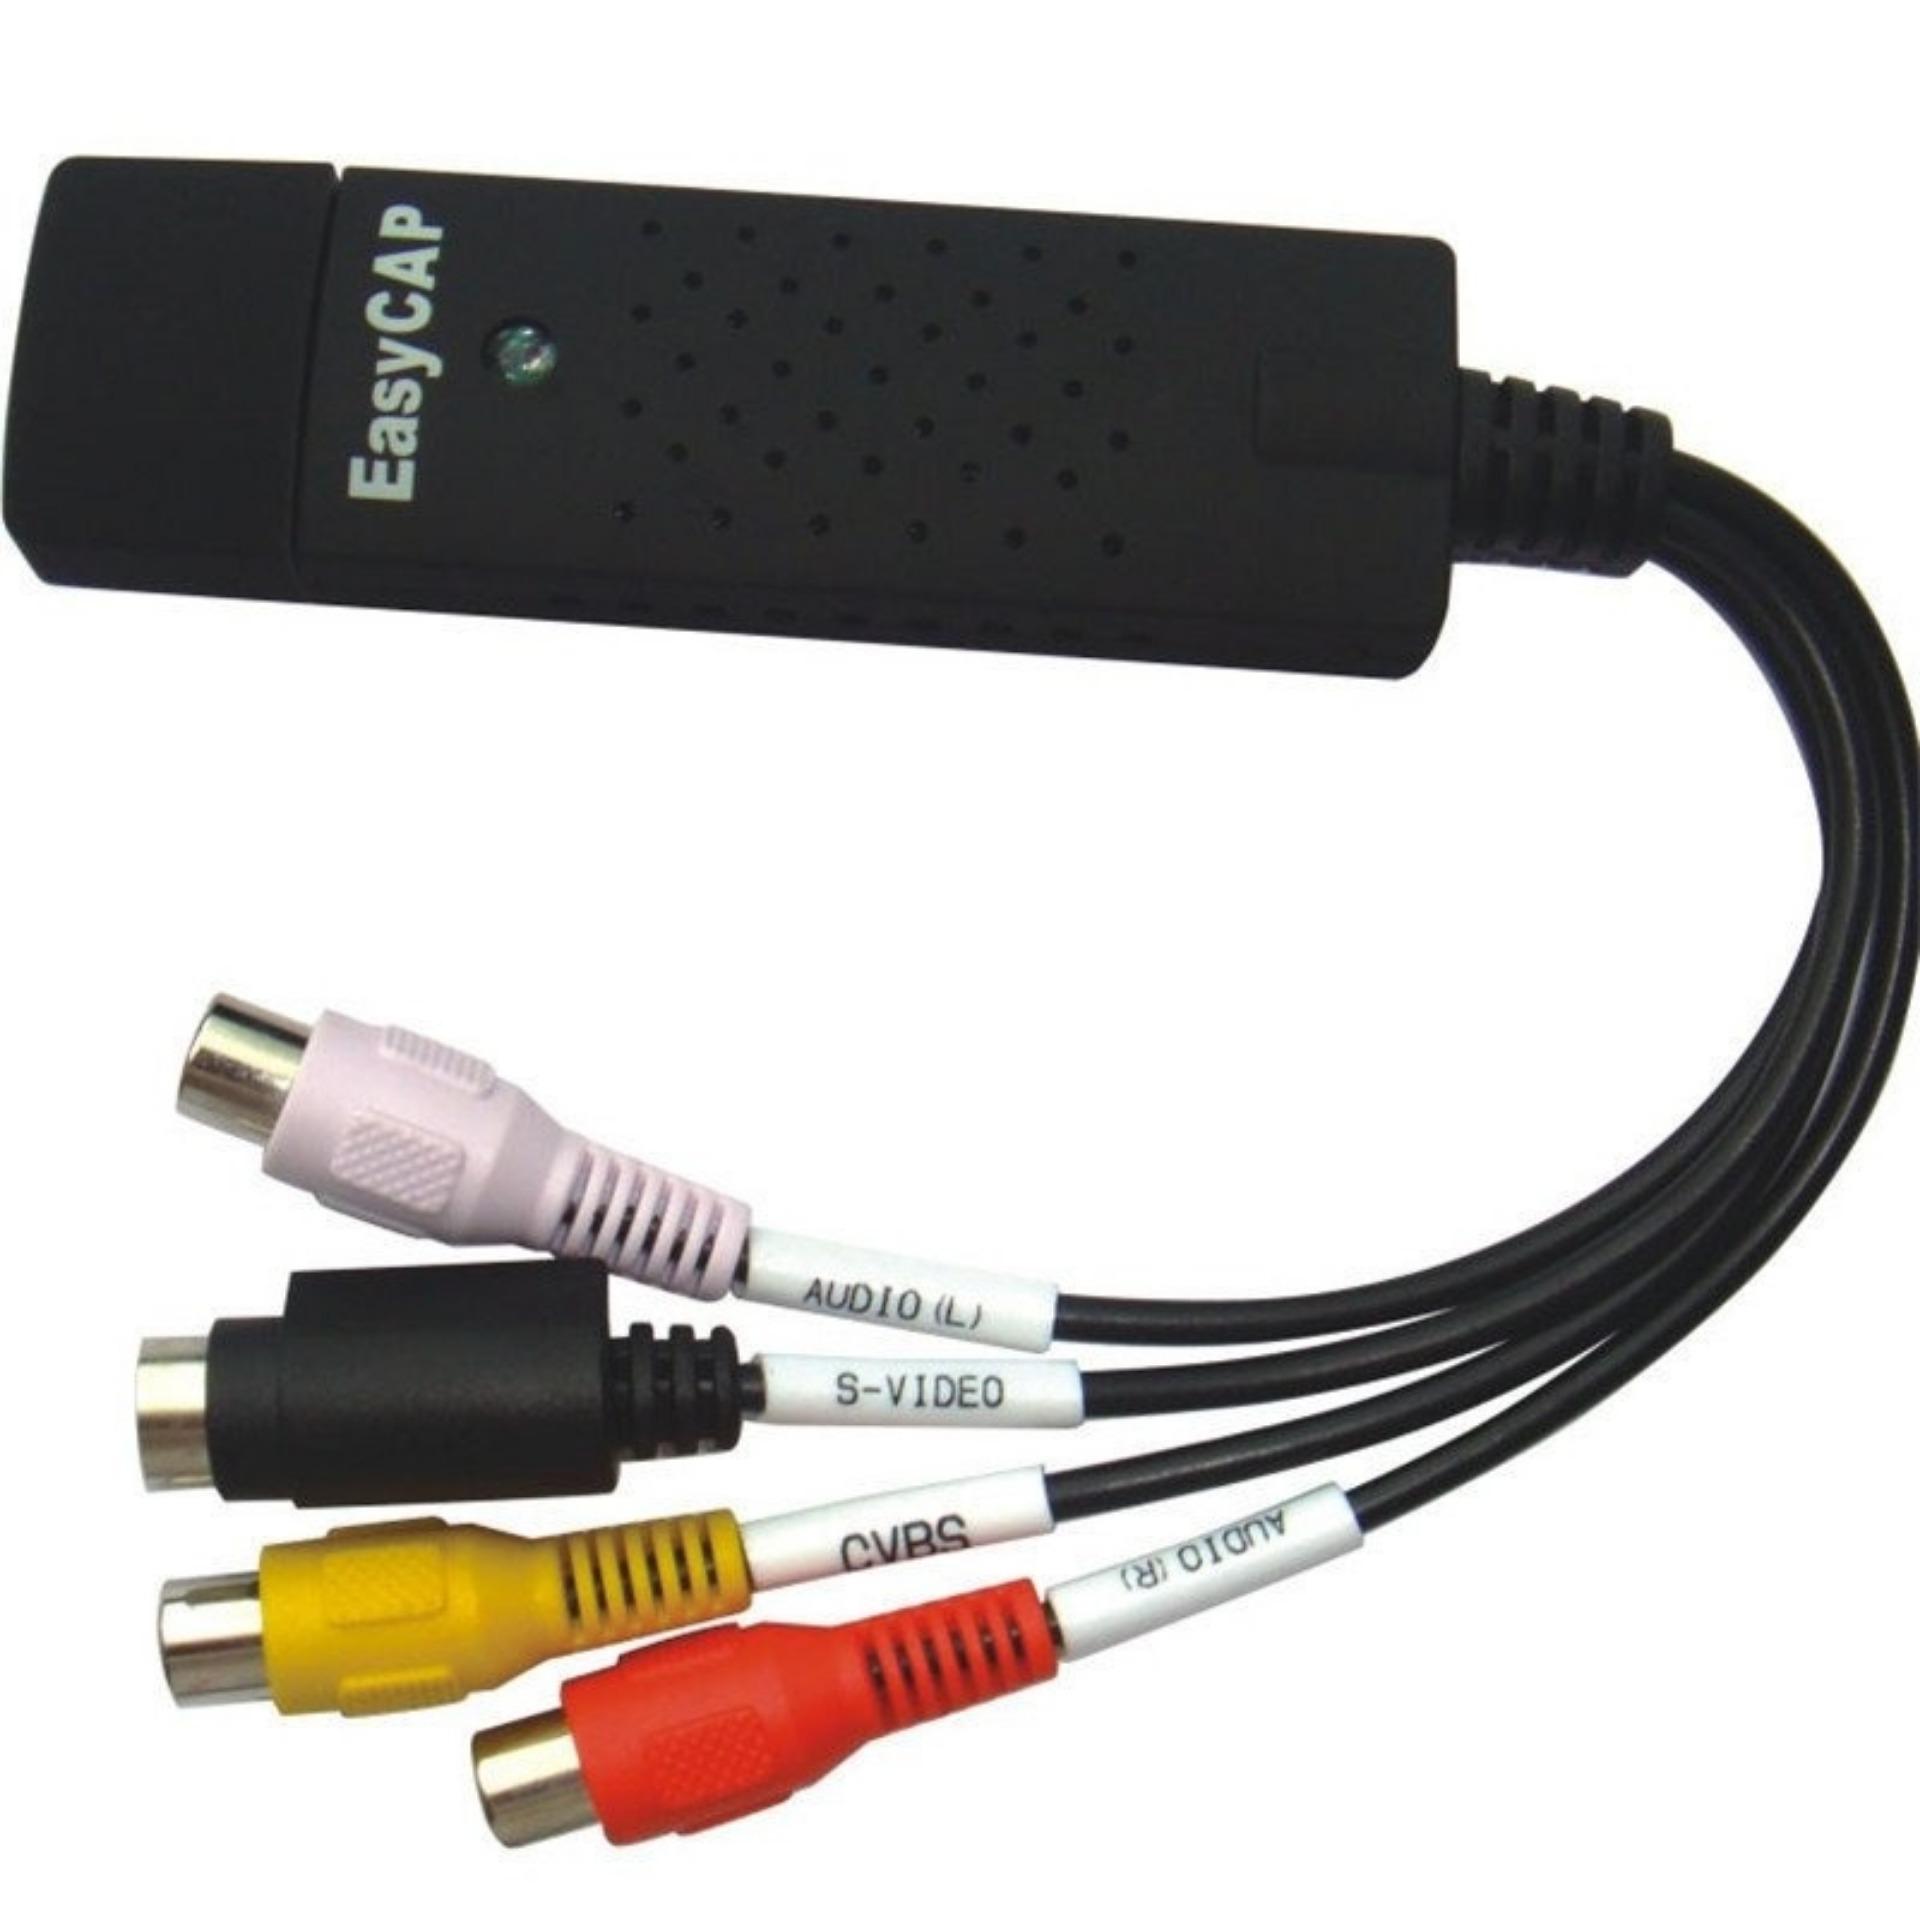 easycap usb video audio adapter